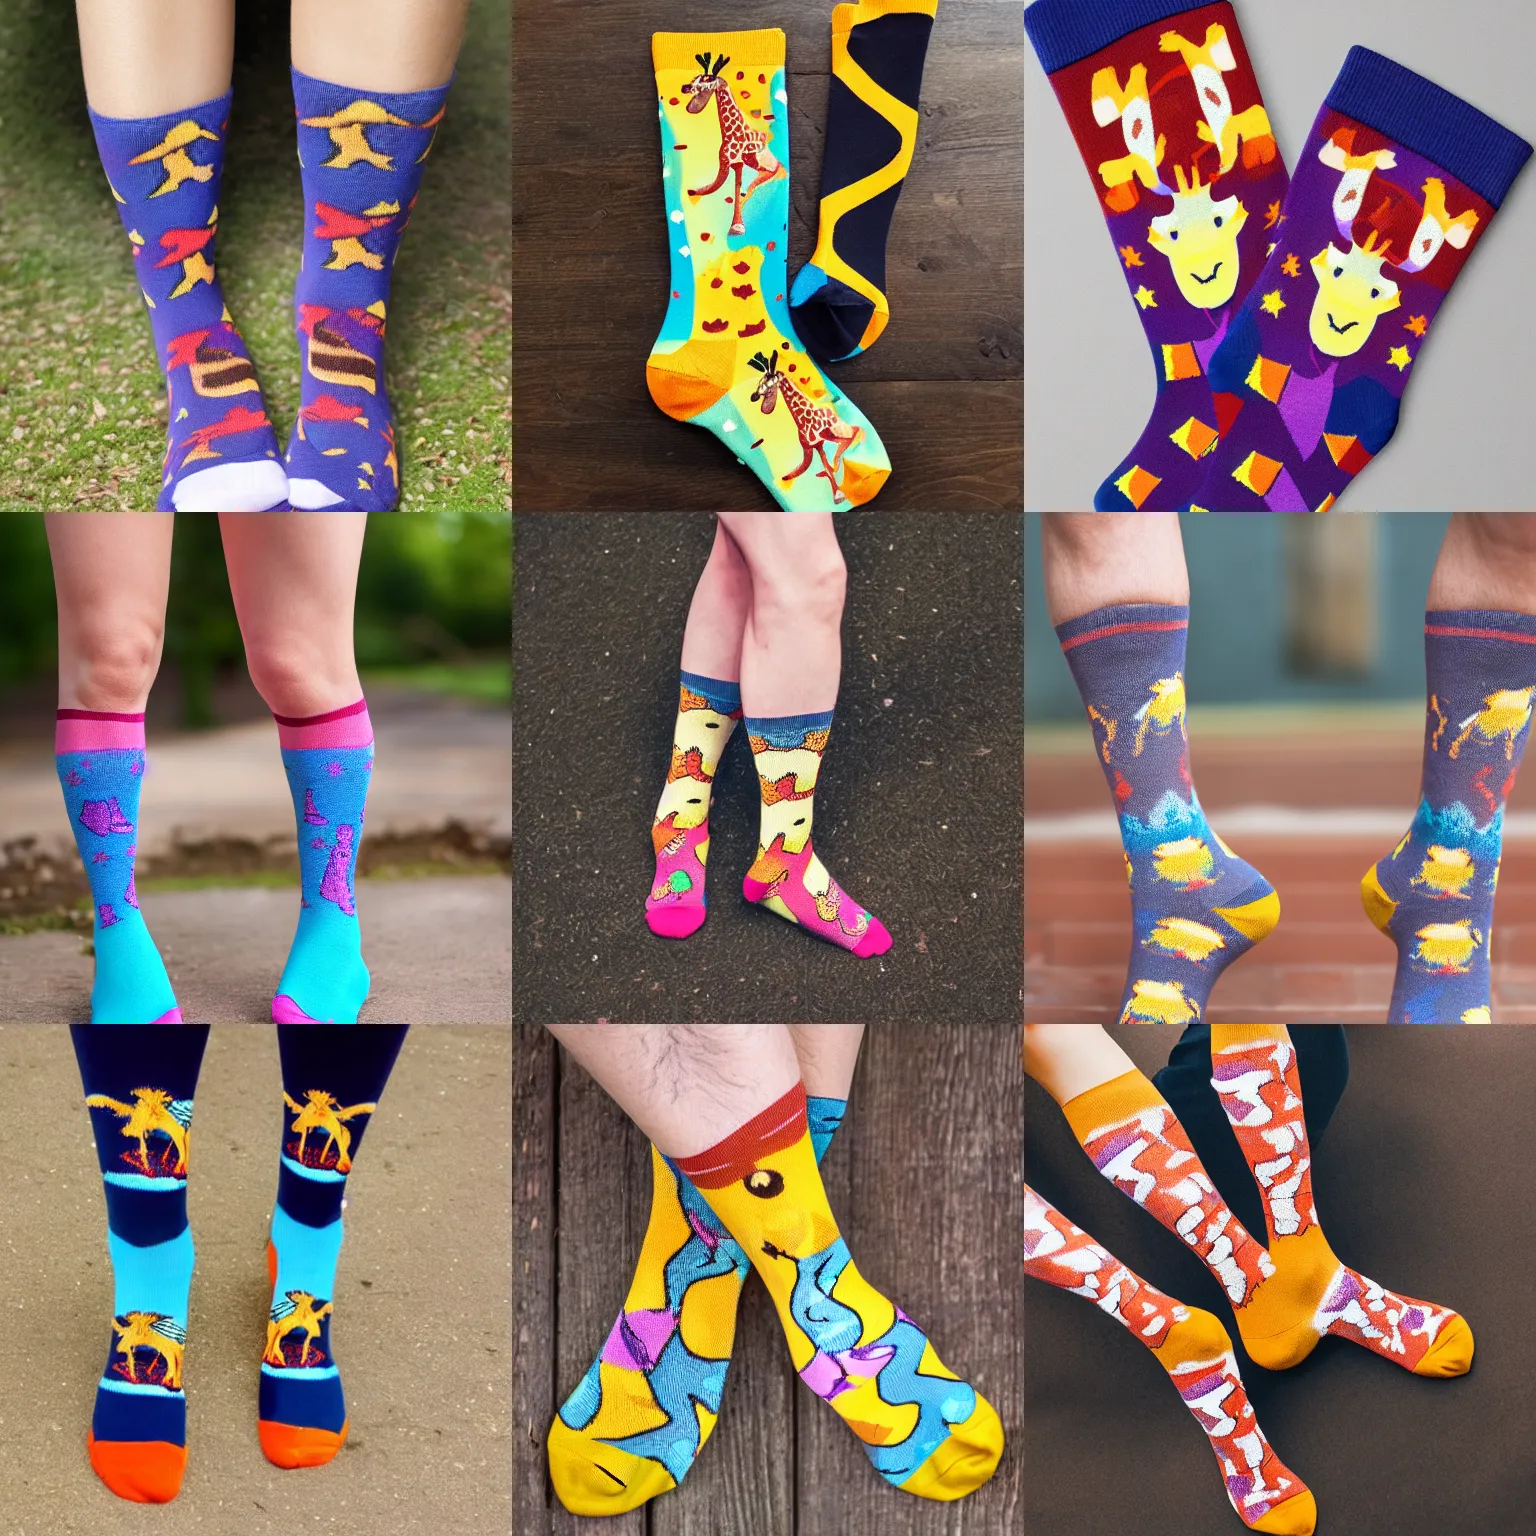 Prompt: a giraffe wearing magical themed socks